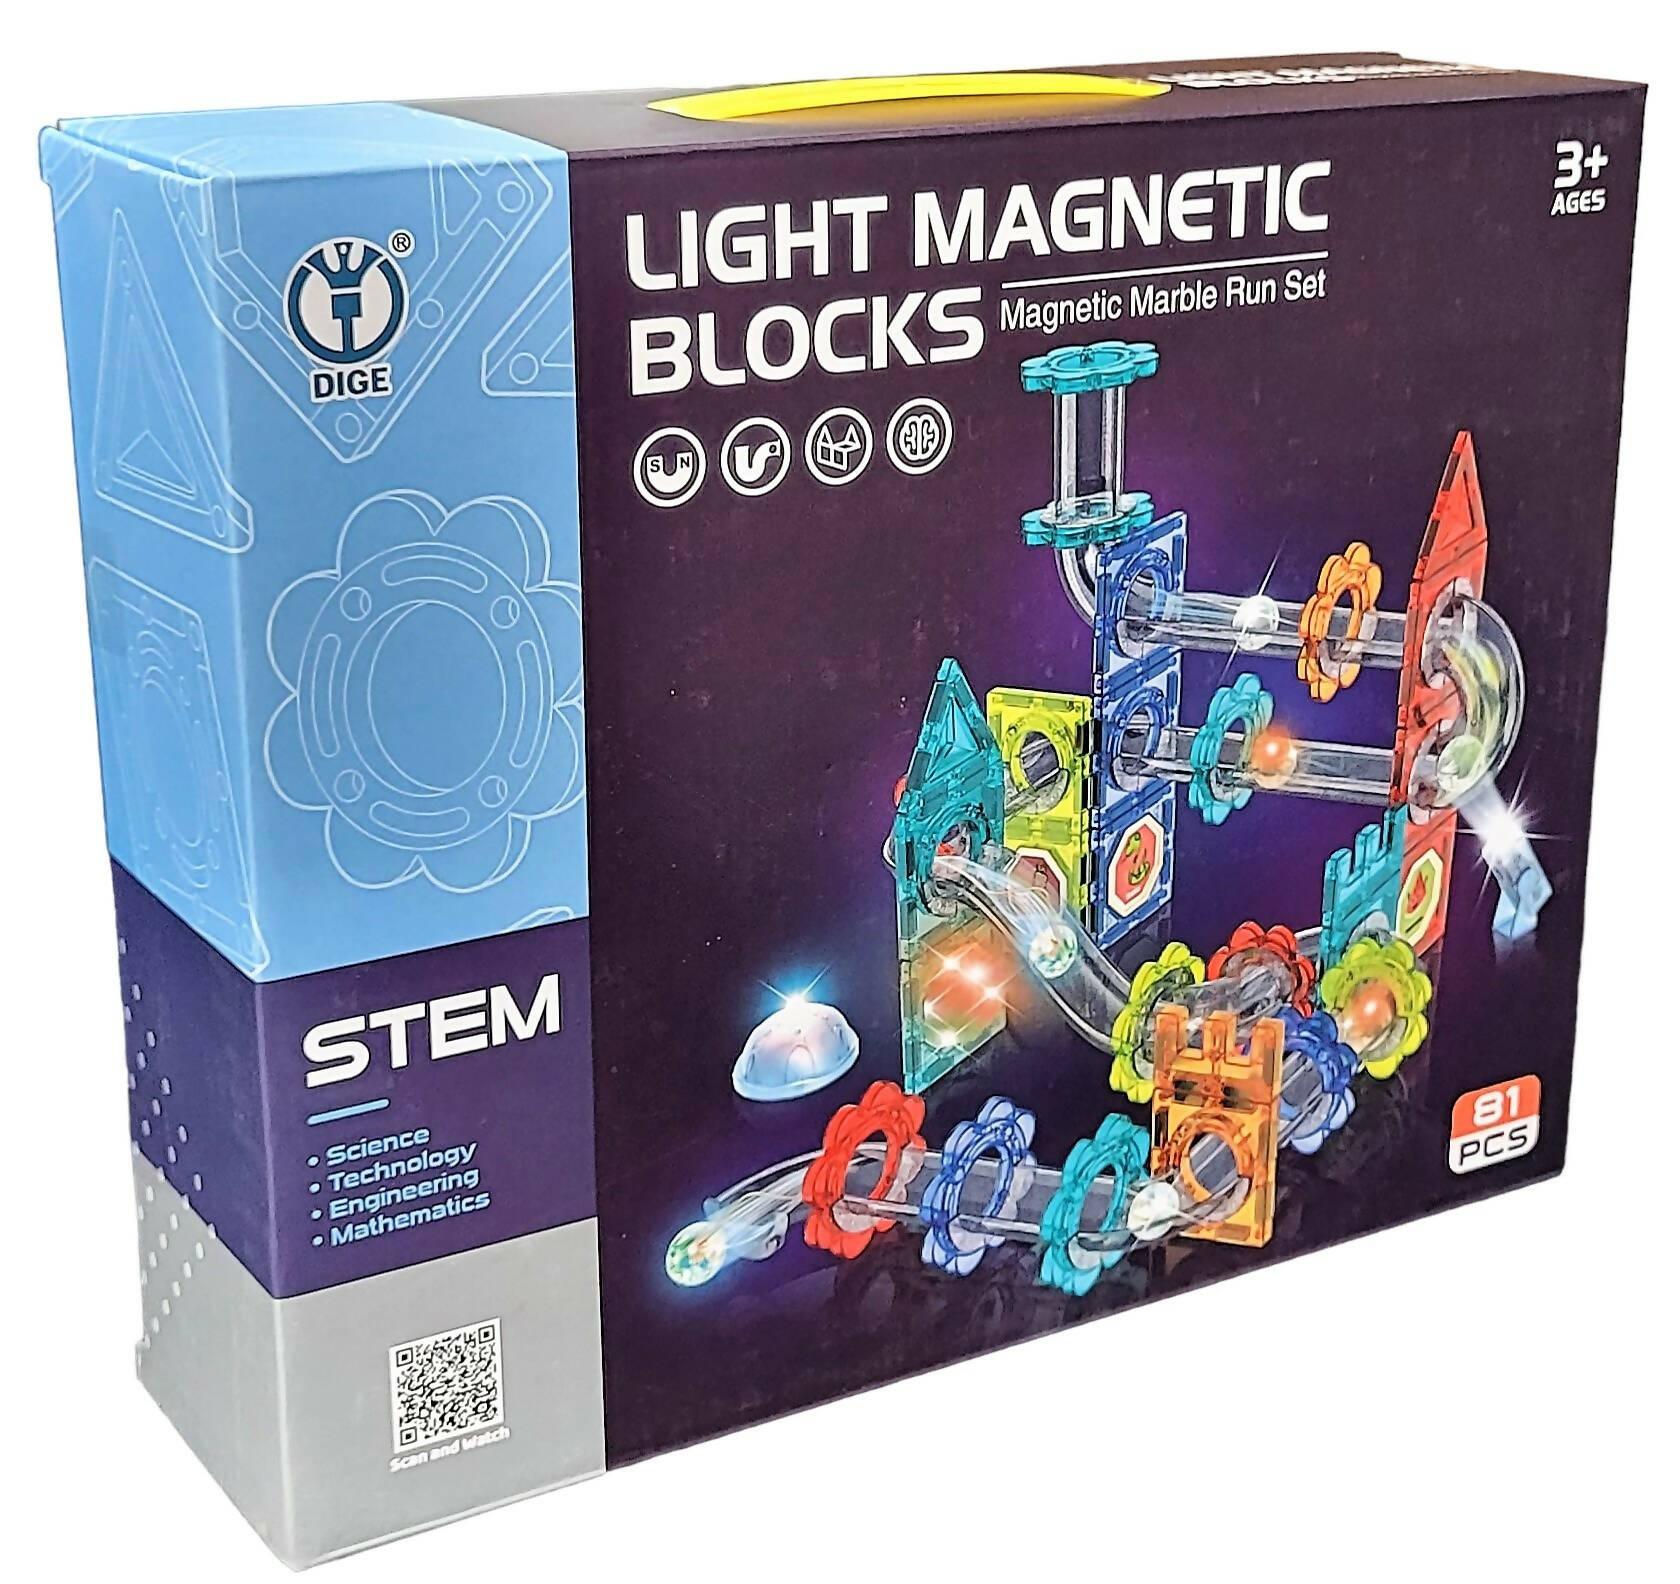 81Pcs Light Magnetic Marble Run Block Set - ValueBox